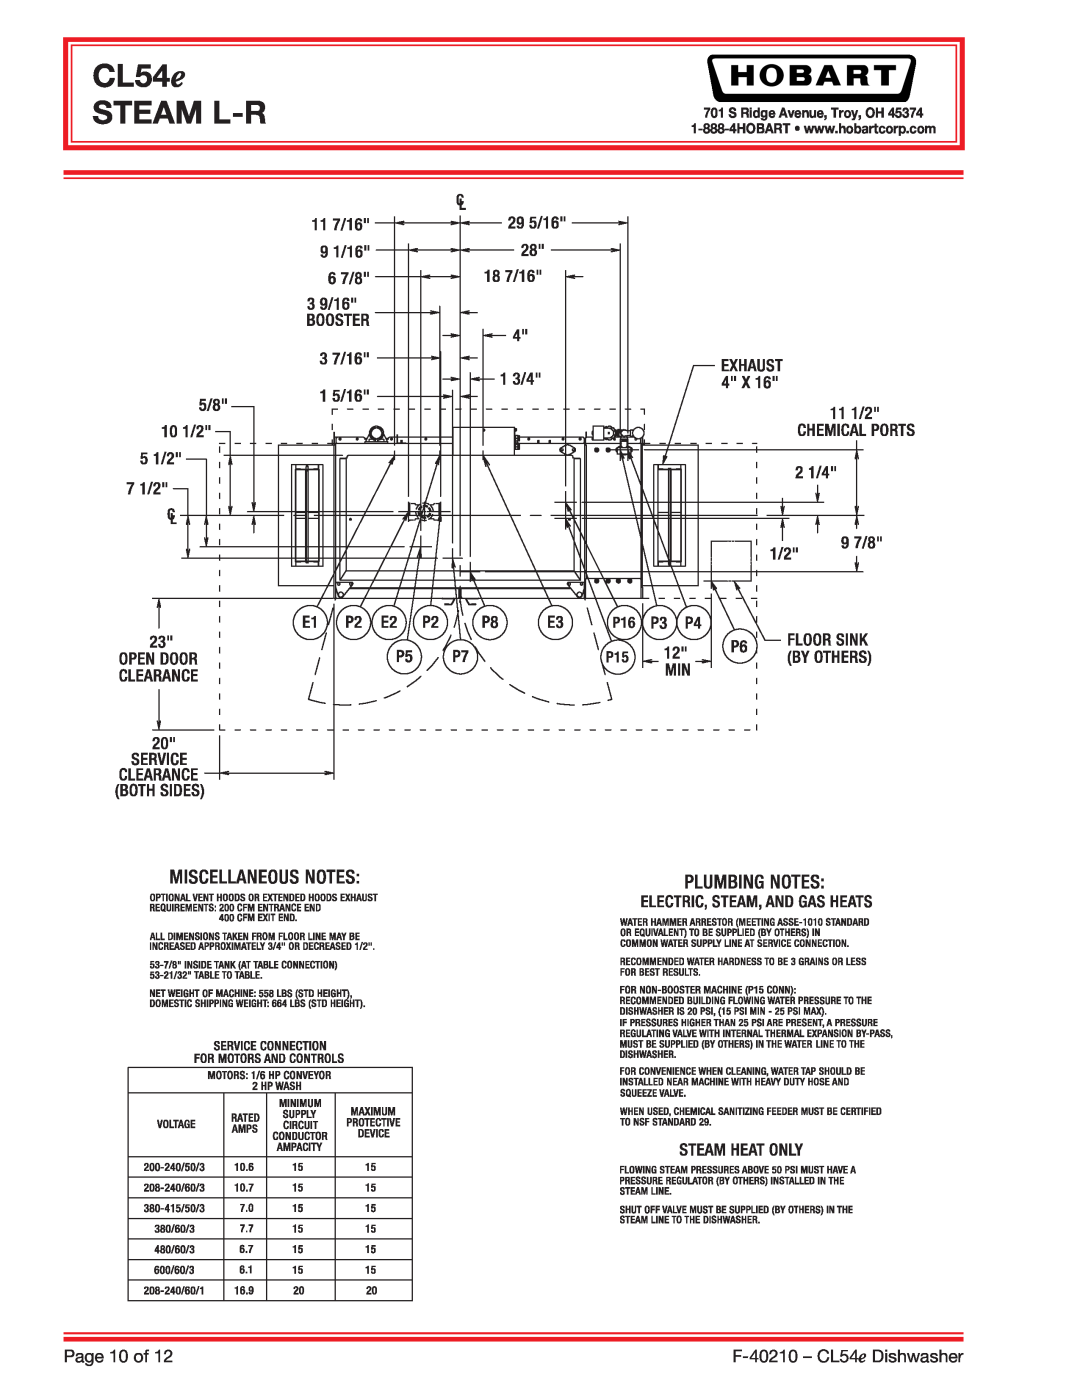 Hobart CL54E dimensions CL54e STEAM L-R, Page 10 of, F-40210- CL54e Dishwasher, S Ridge Avenue, Troy, OH 